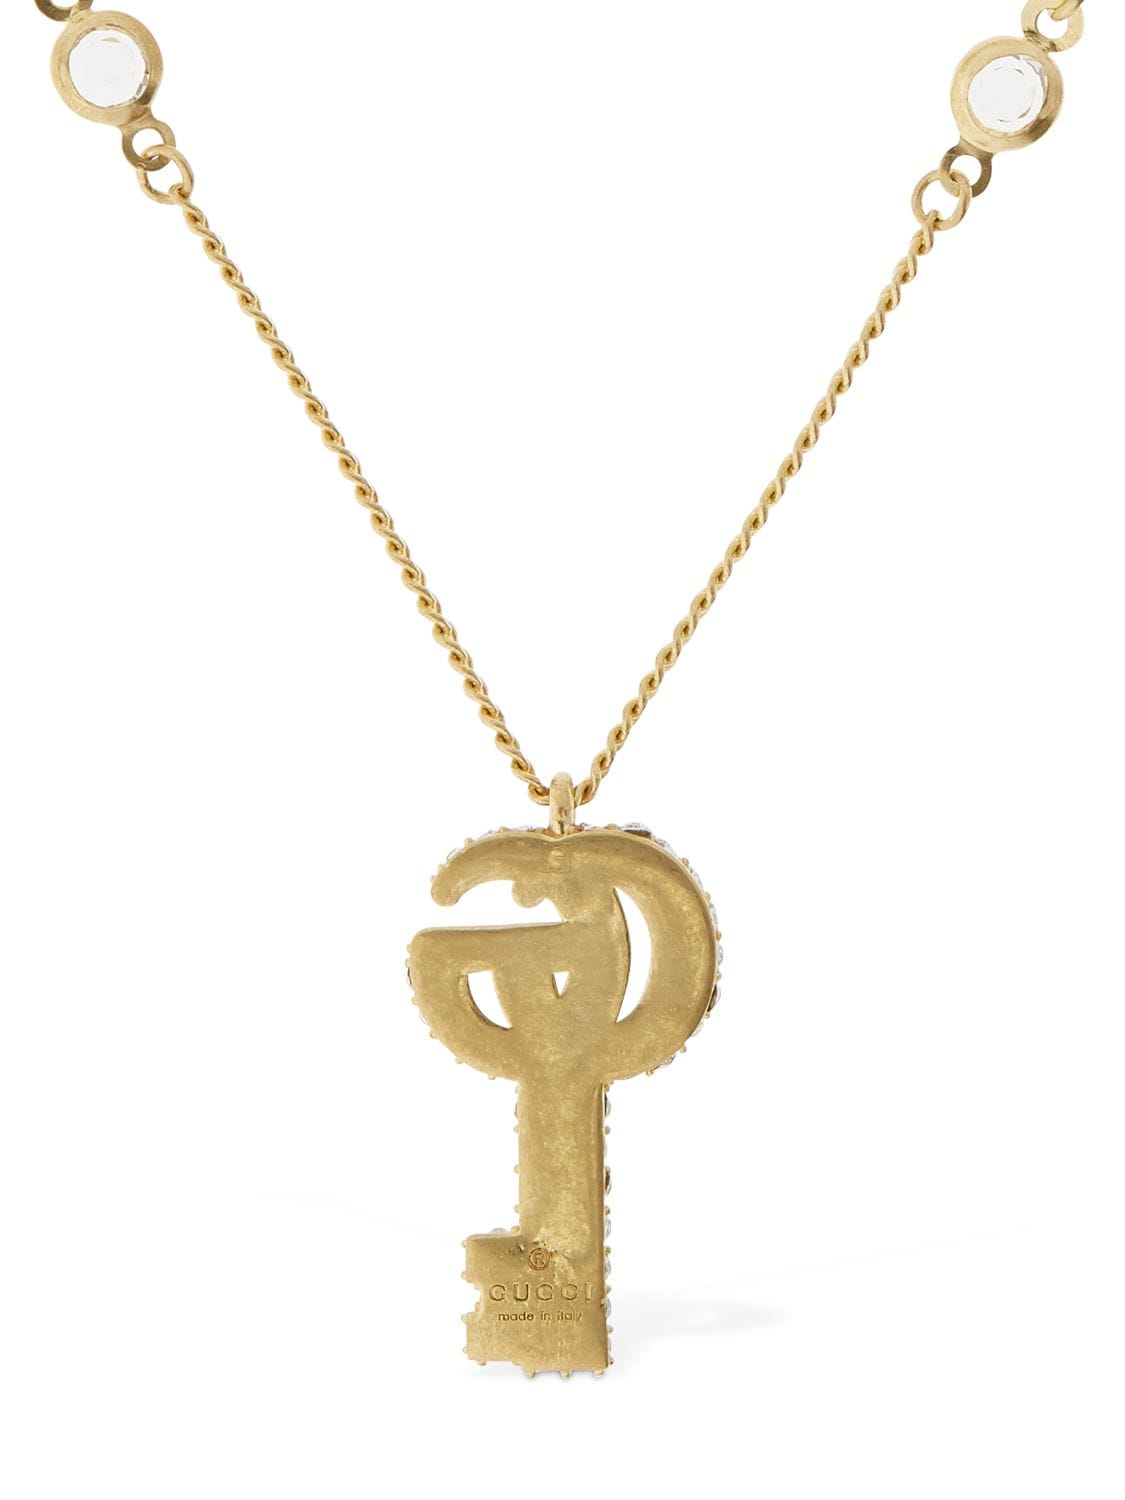 Double G key necklace